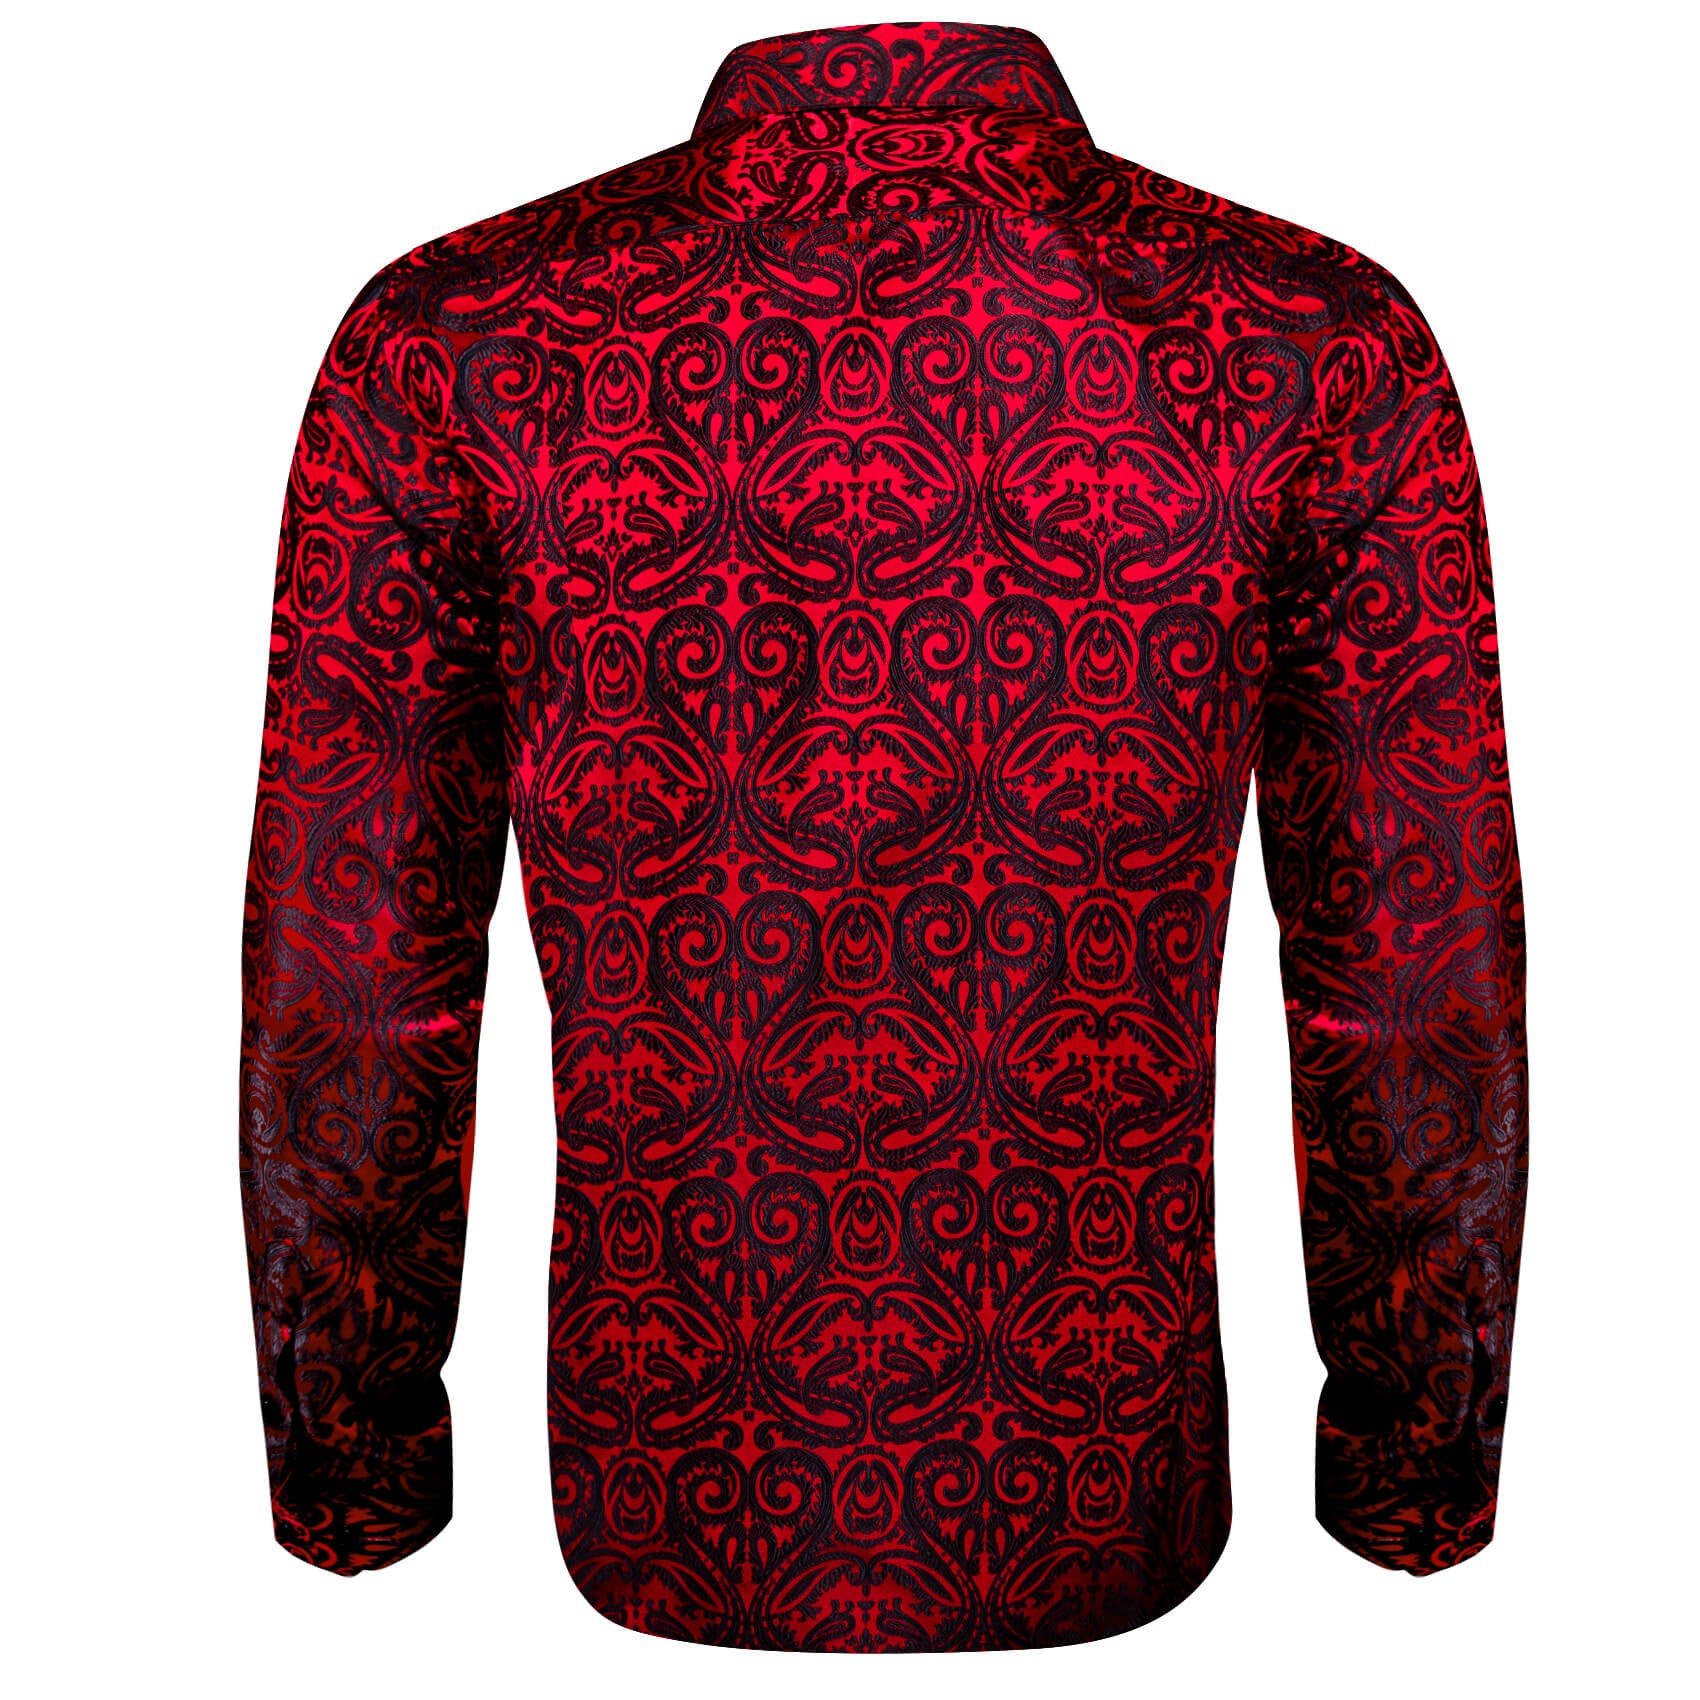 Barry.wang Men's Shirt Red Black Woven Paisley Silk Long Sleeve Shirt Classic